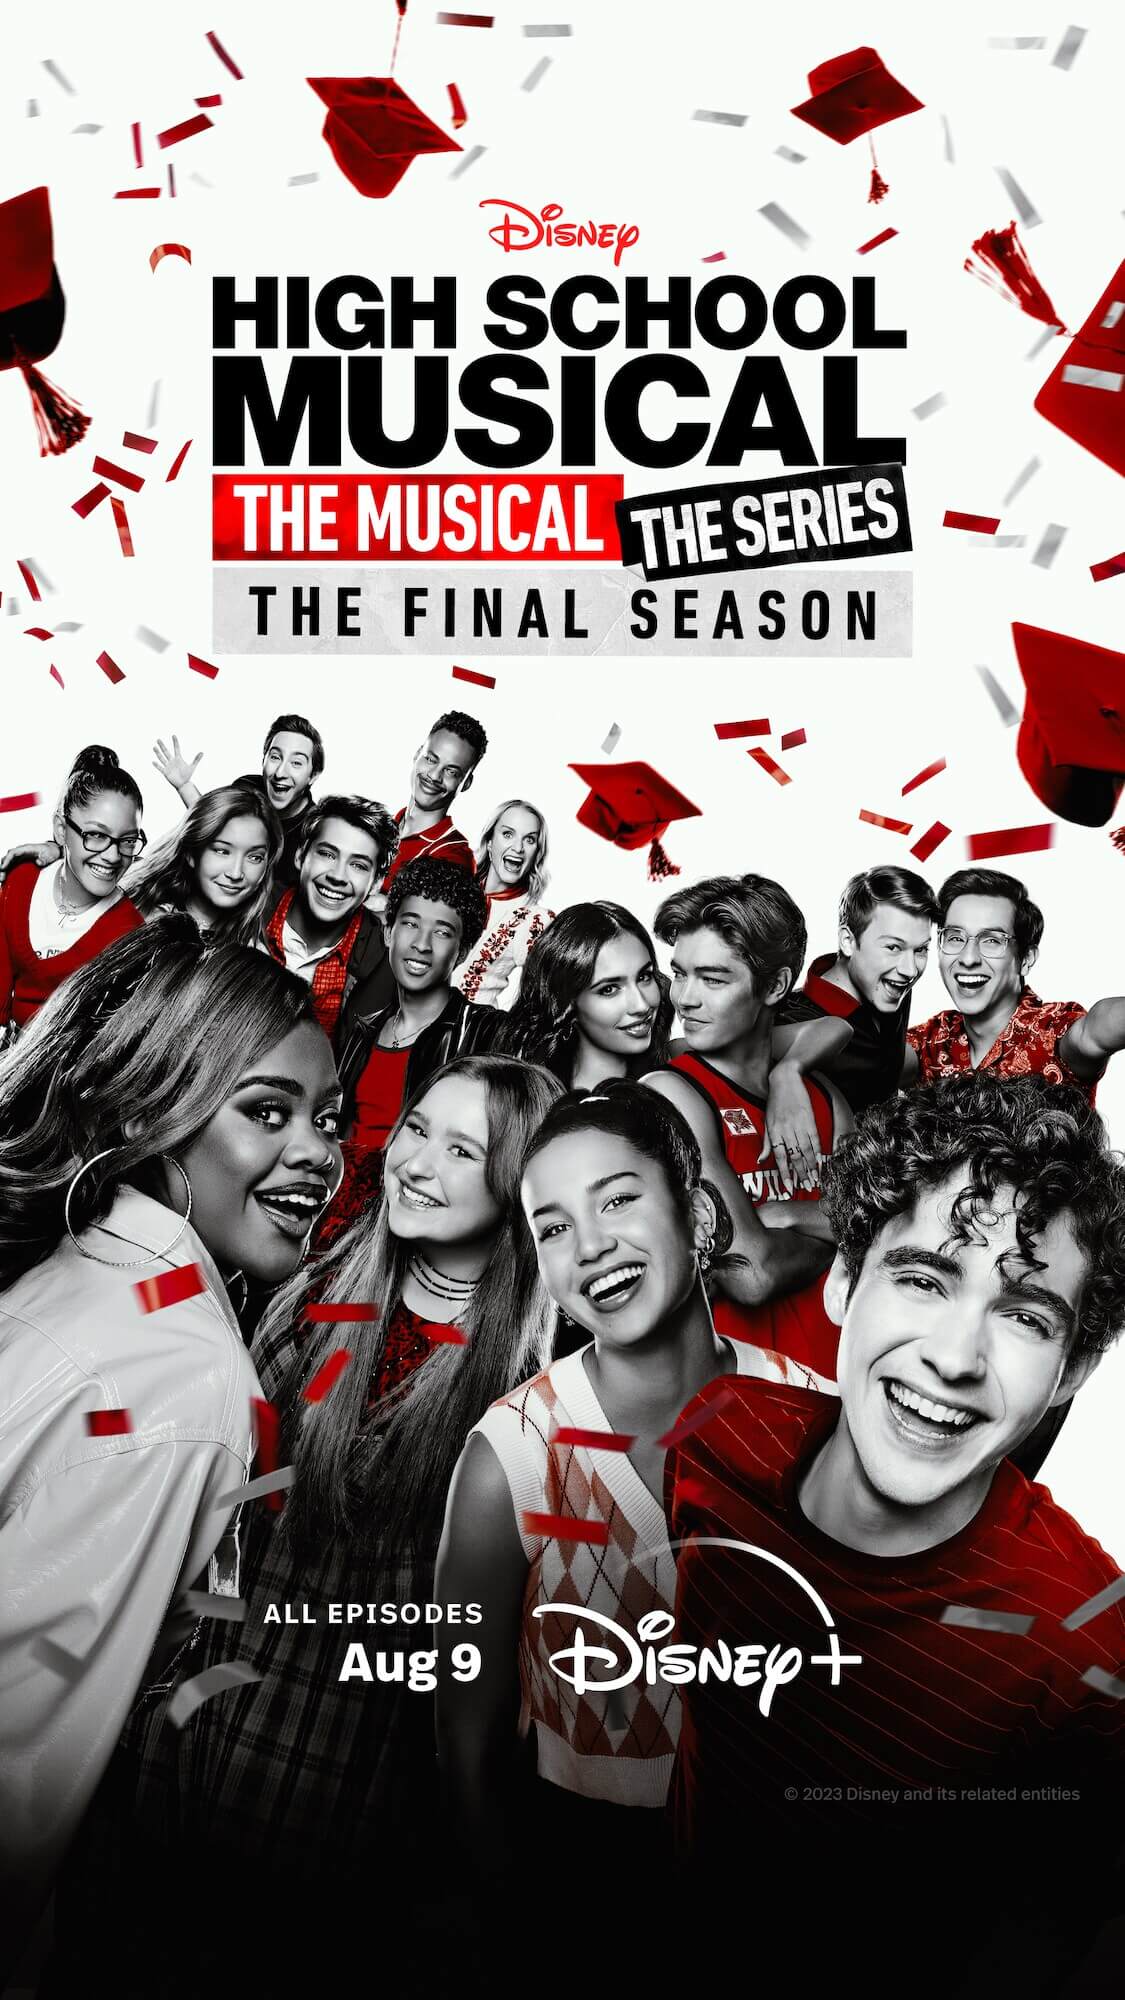 “High School Musical The Musical The Series” The Final Season